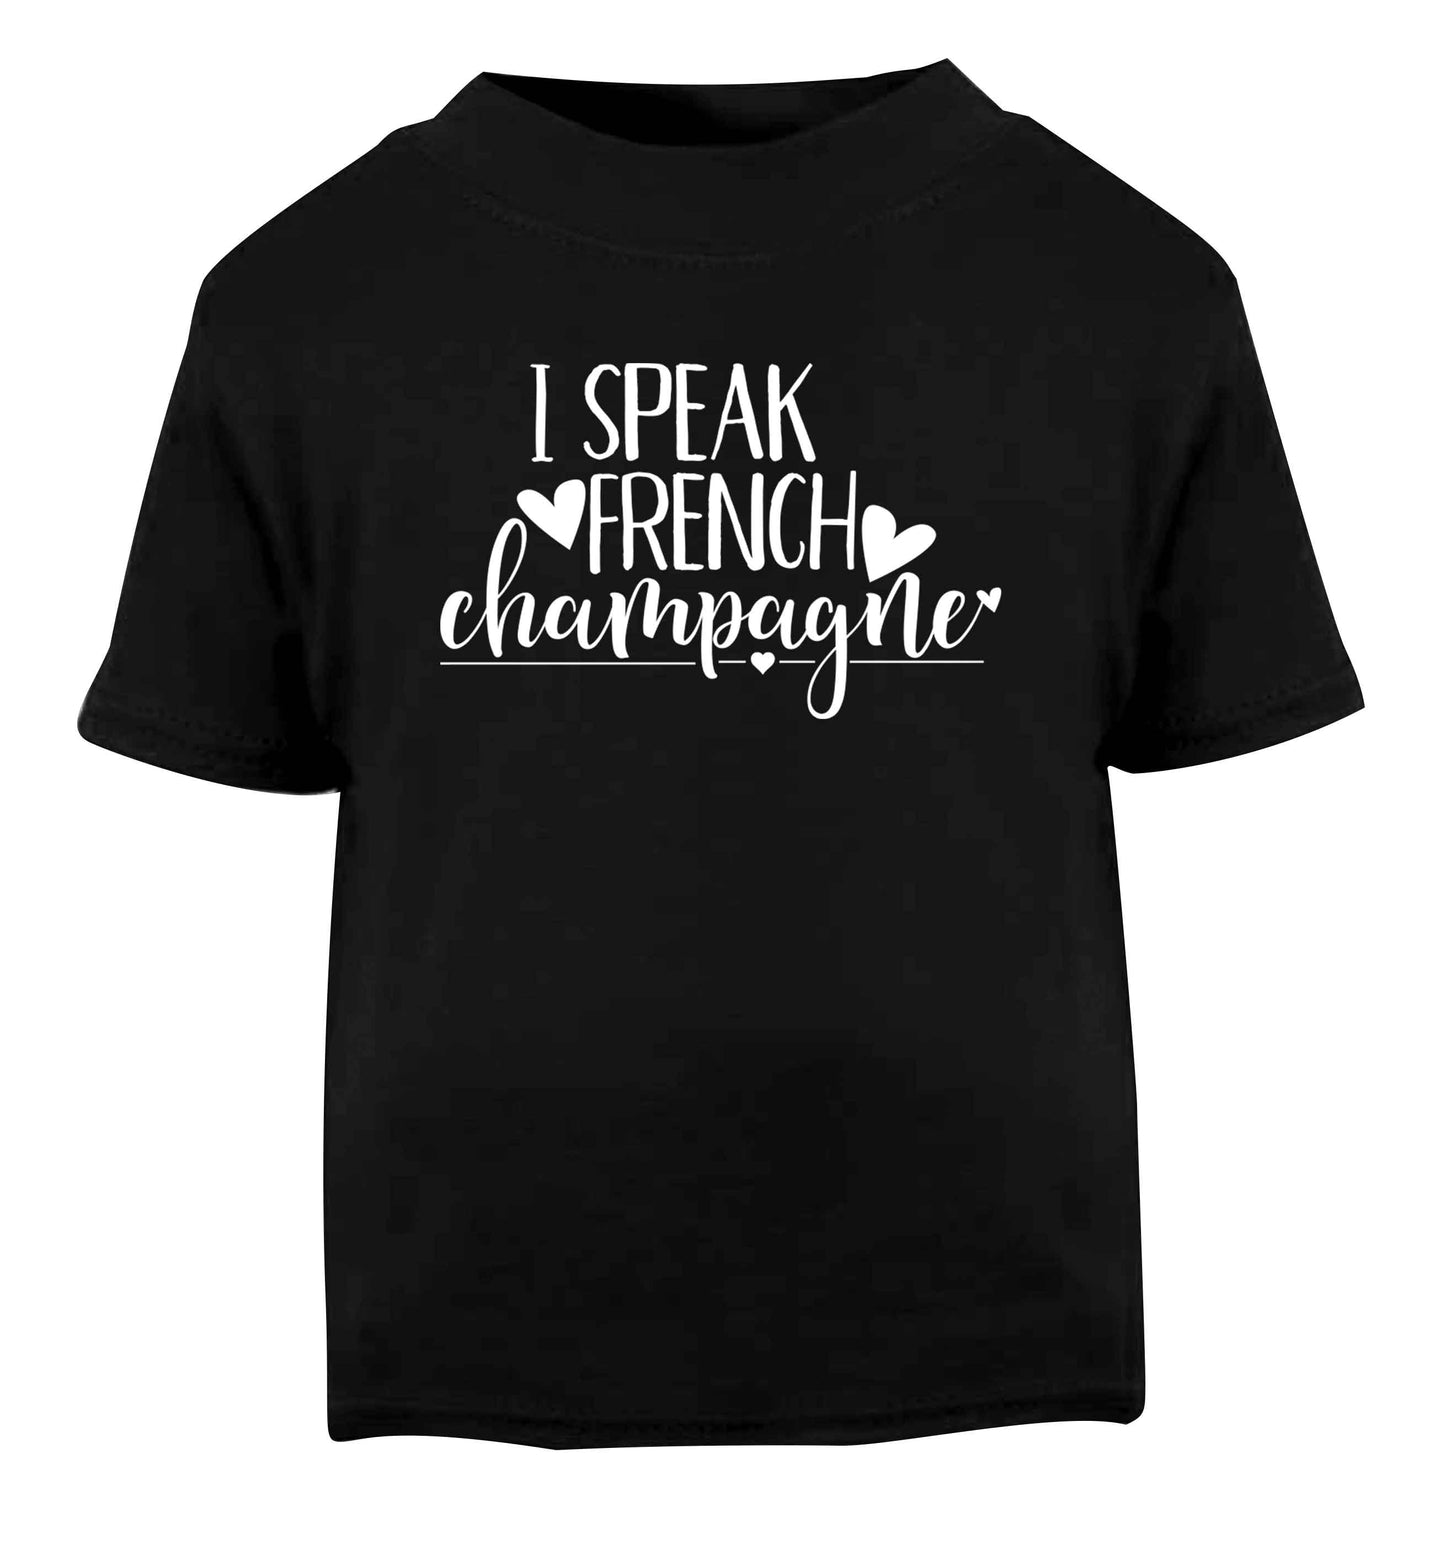 I speak french champagne Black Baby Toddler Tshirt 2 years